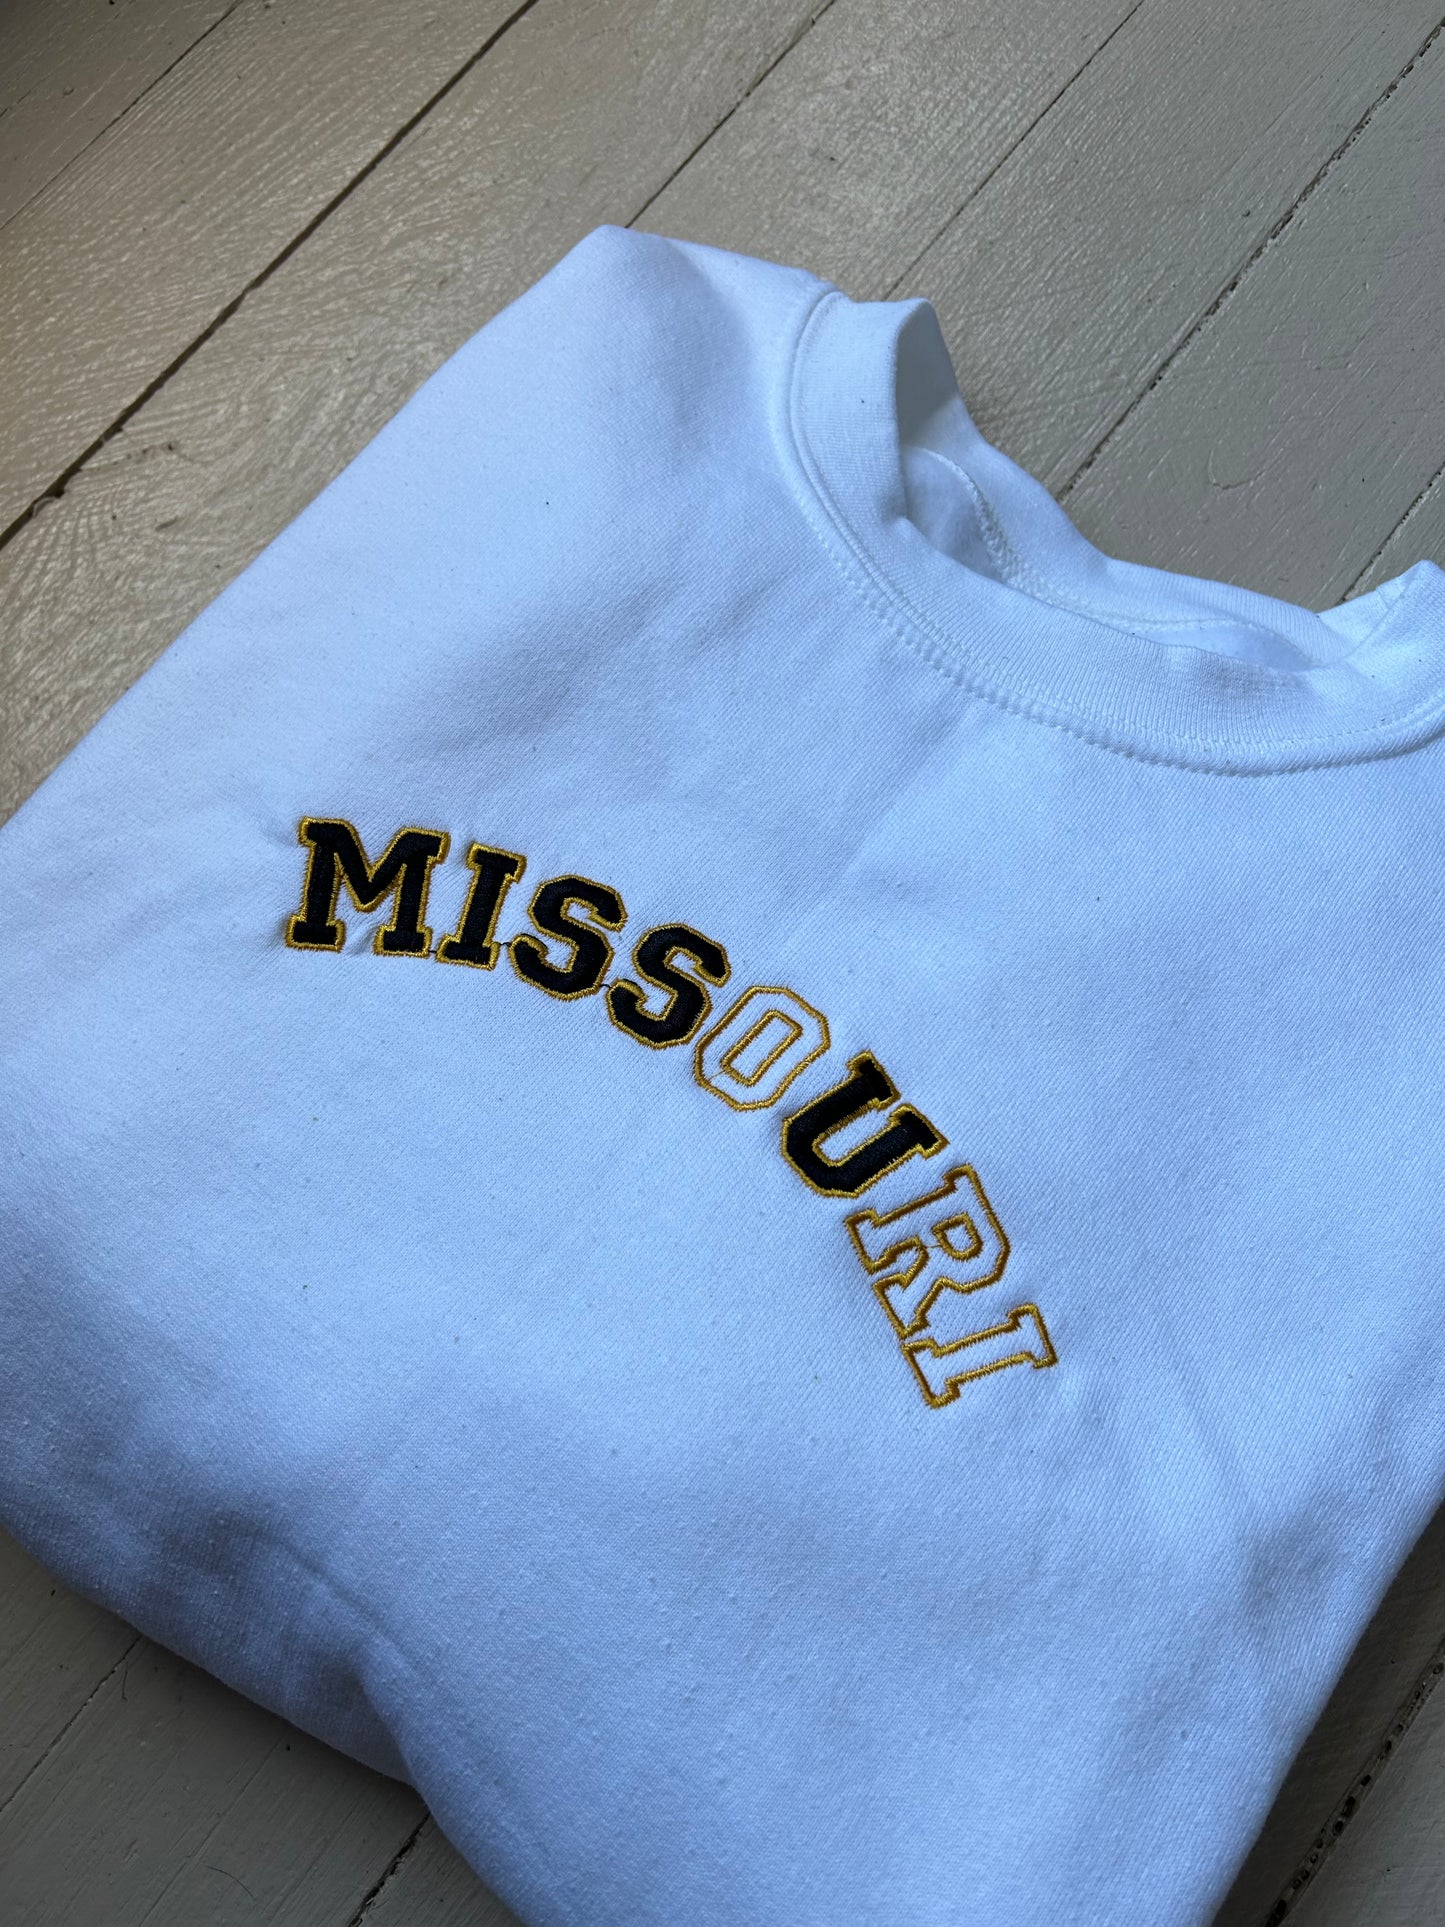 Embroidered 'Missouri Miss U'  Hoodie, Crew Neck Long Sleeve, Classic fit, Unisex, Adult